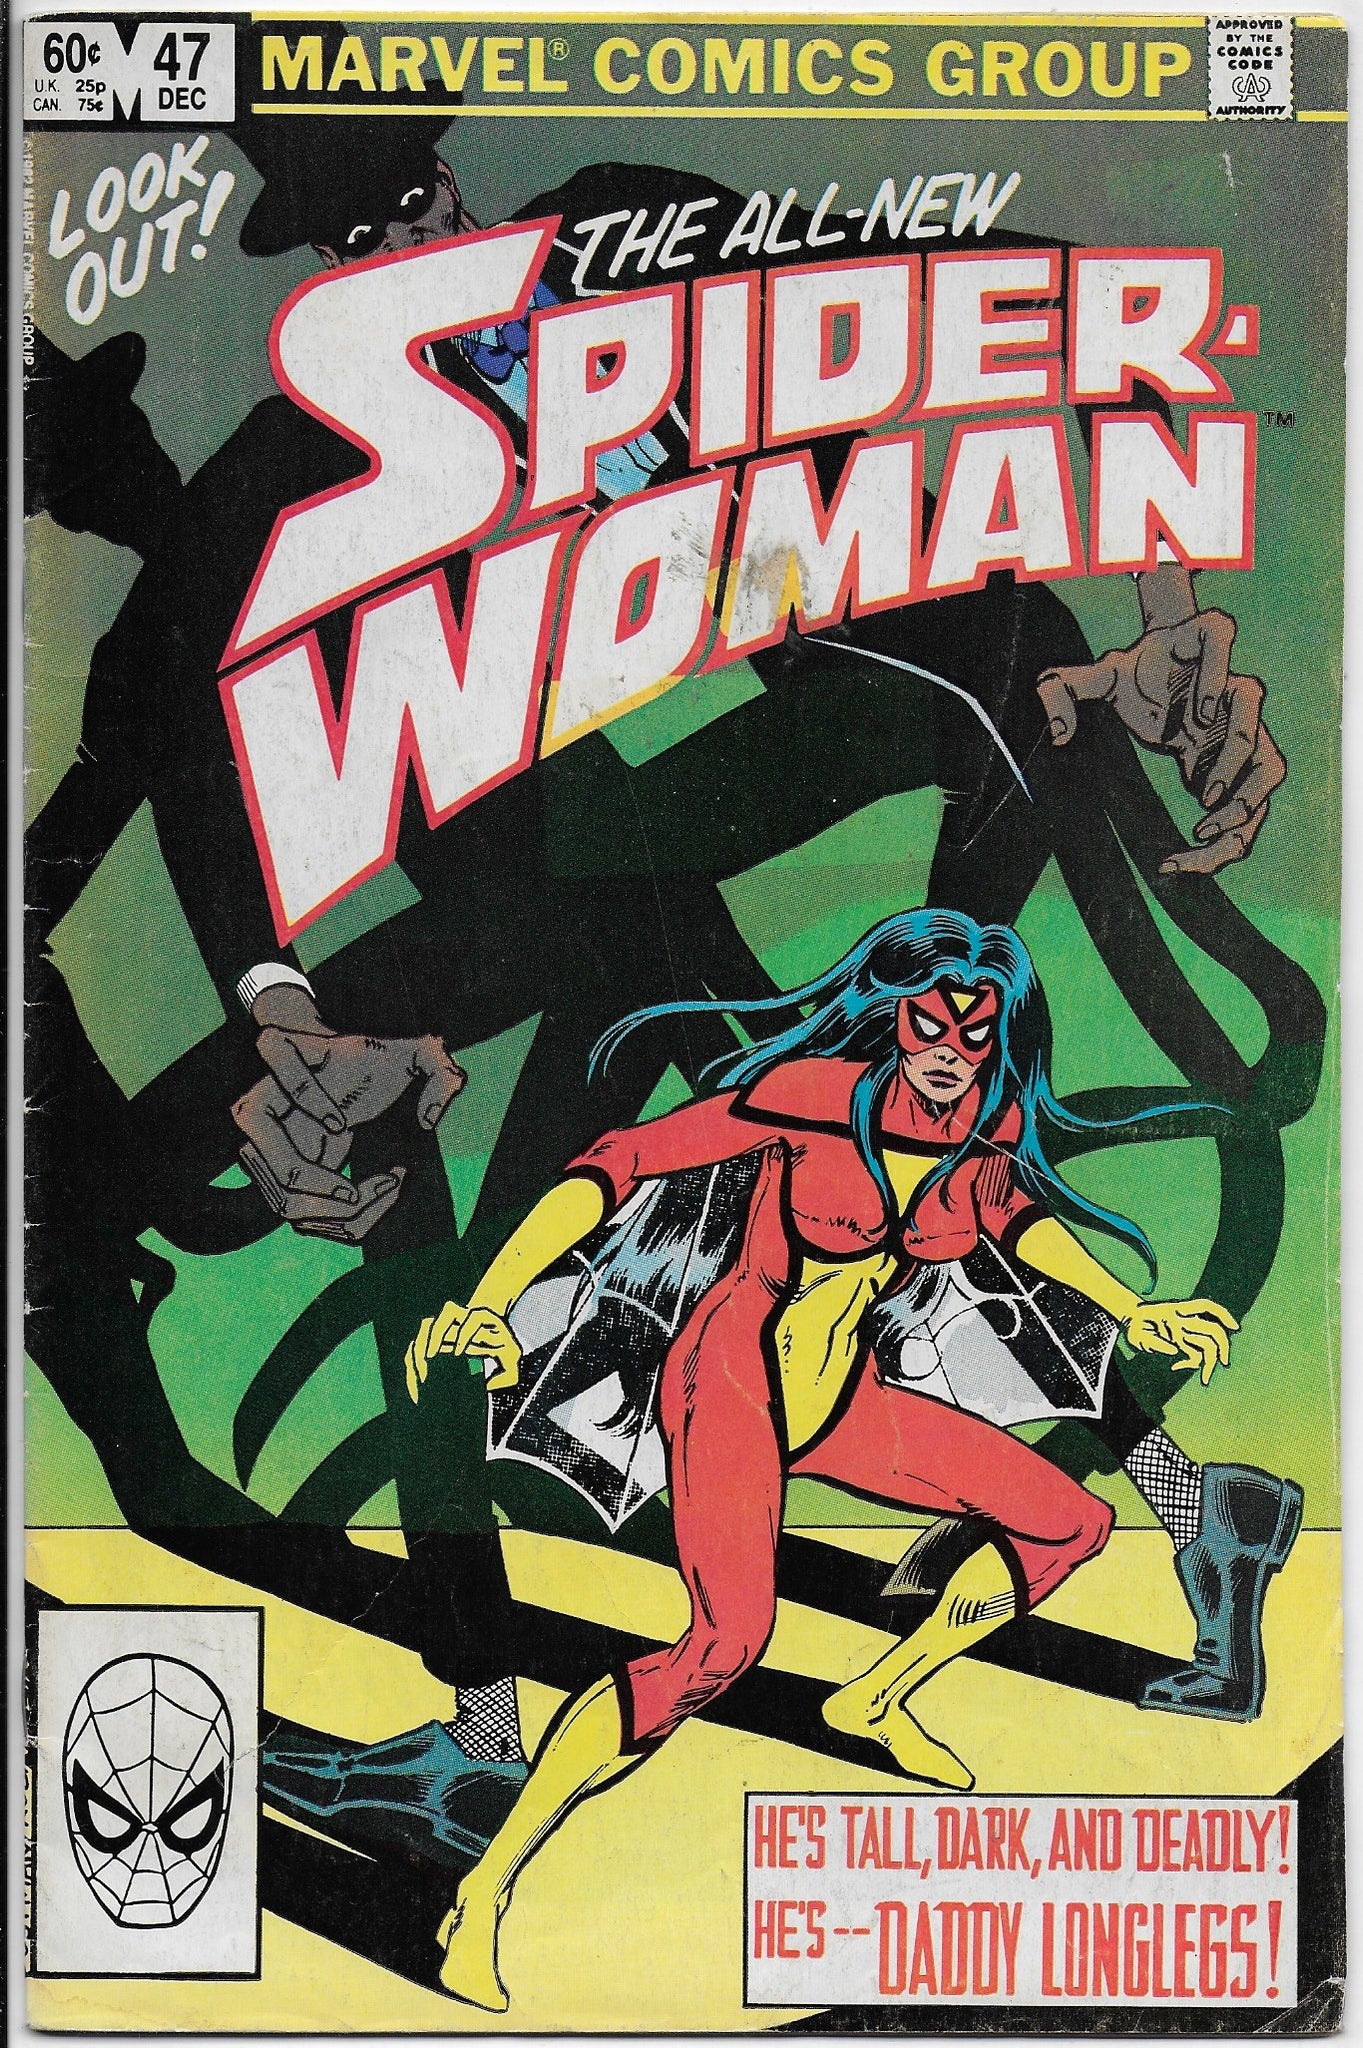 spider-woman 47